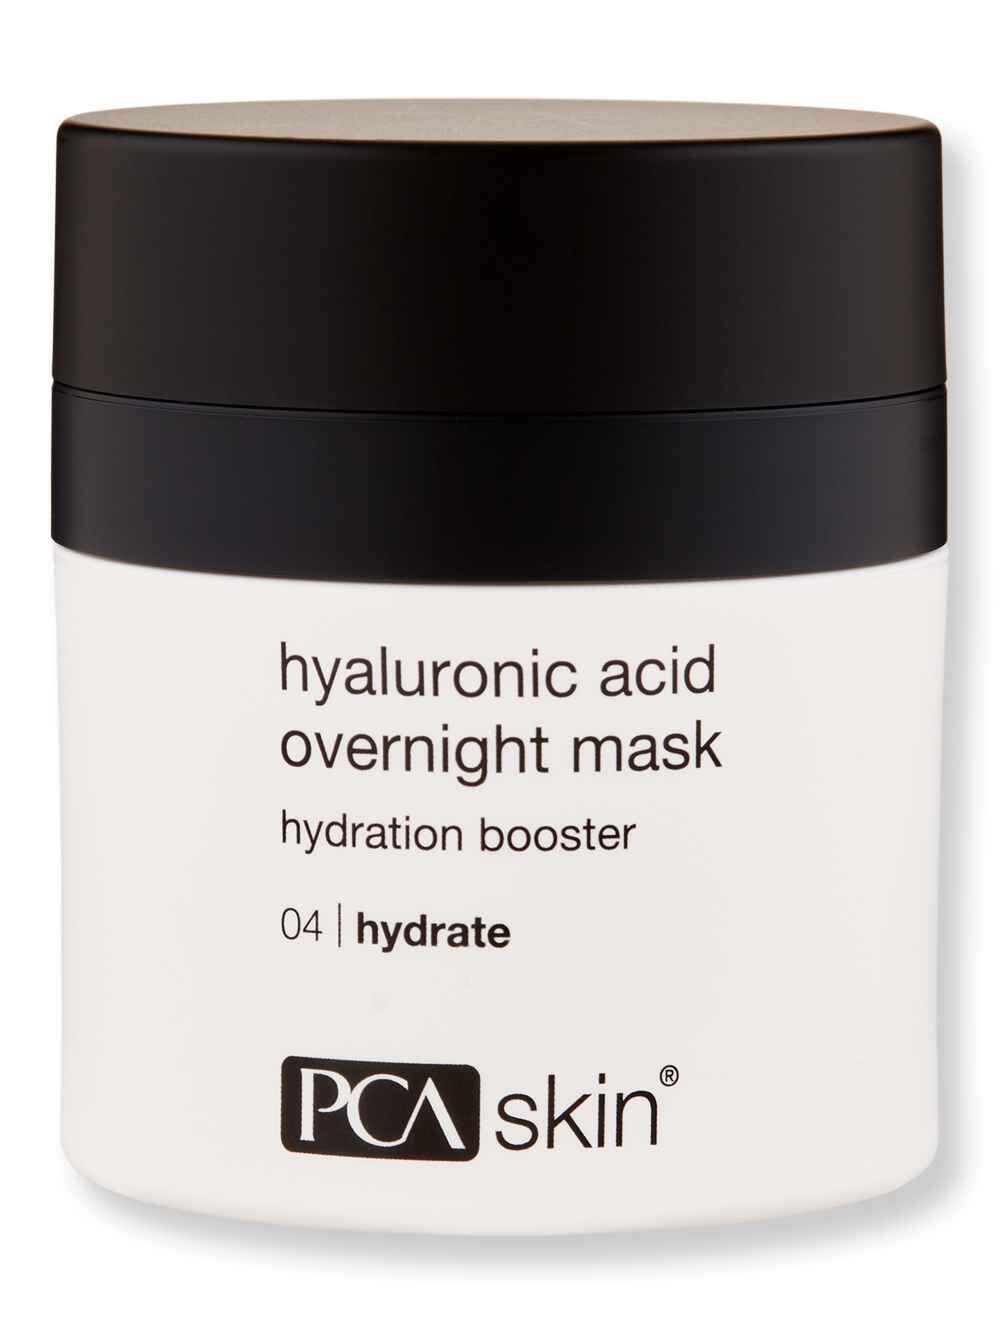 PCA Skin PCA Skin Hyaluronic Acid Overnight Mask 1.8 oz53 ml Night Creams 